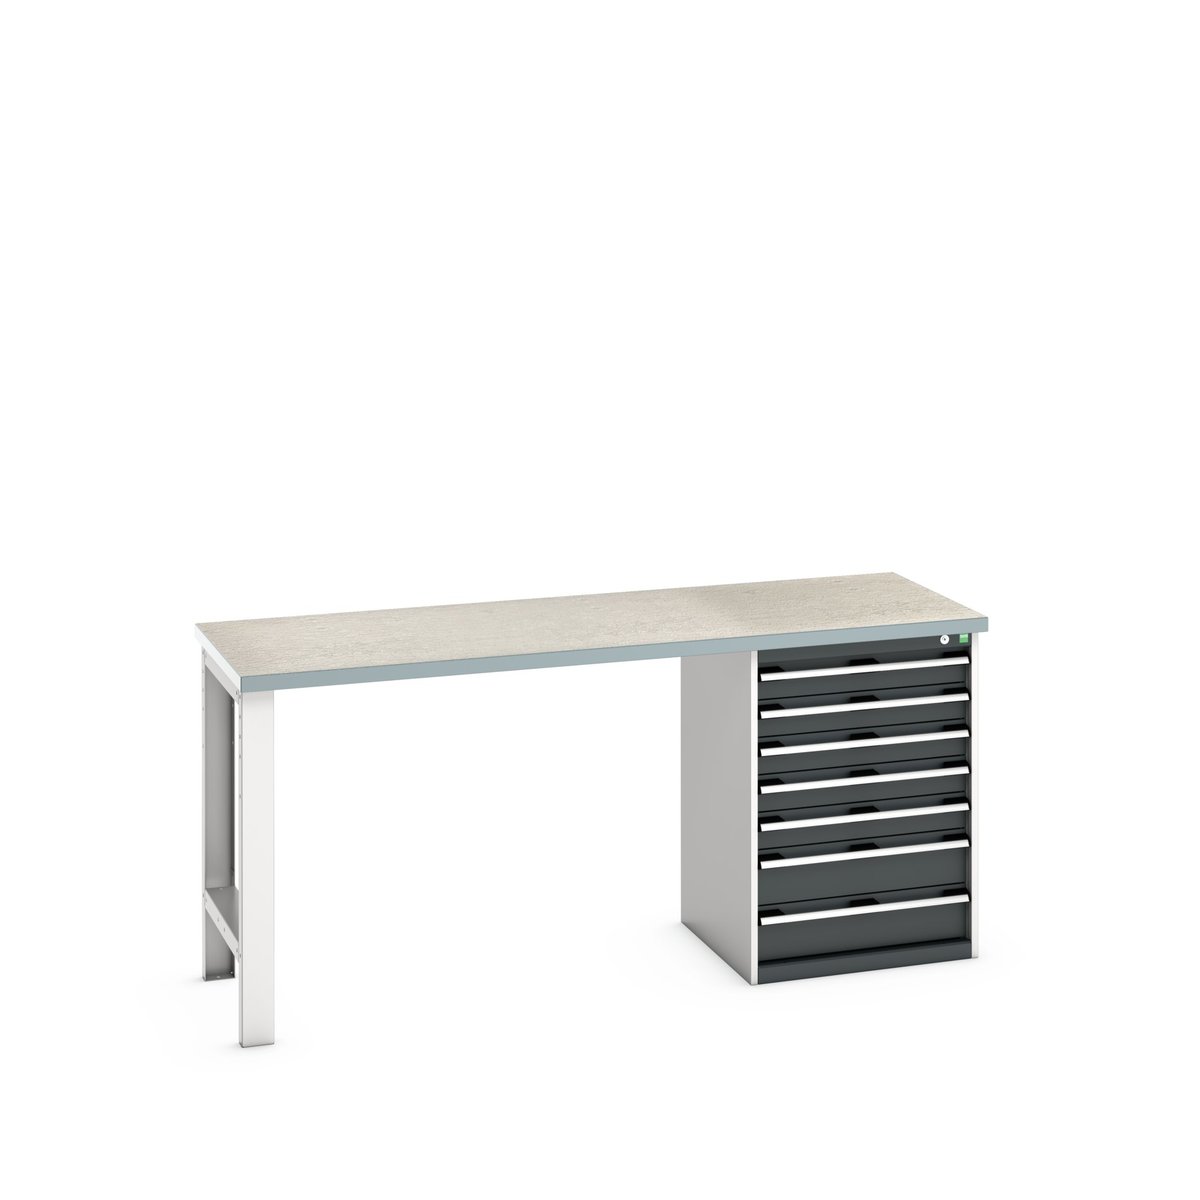 41004122. - cubio pedestal bench (lino)